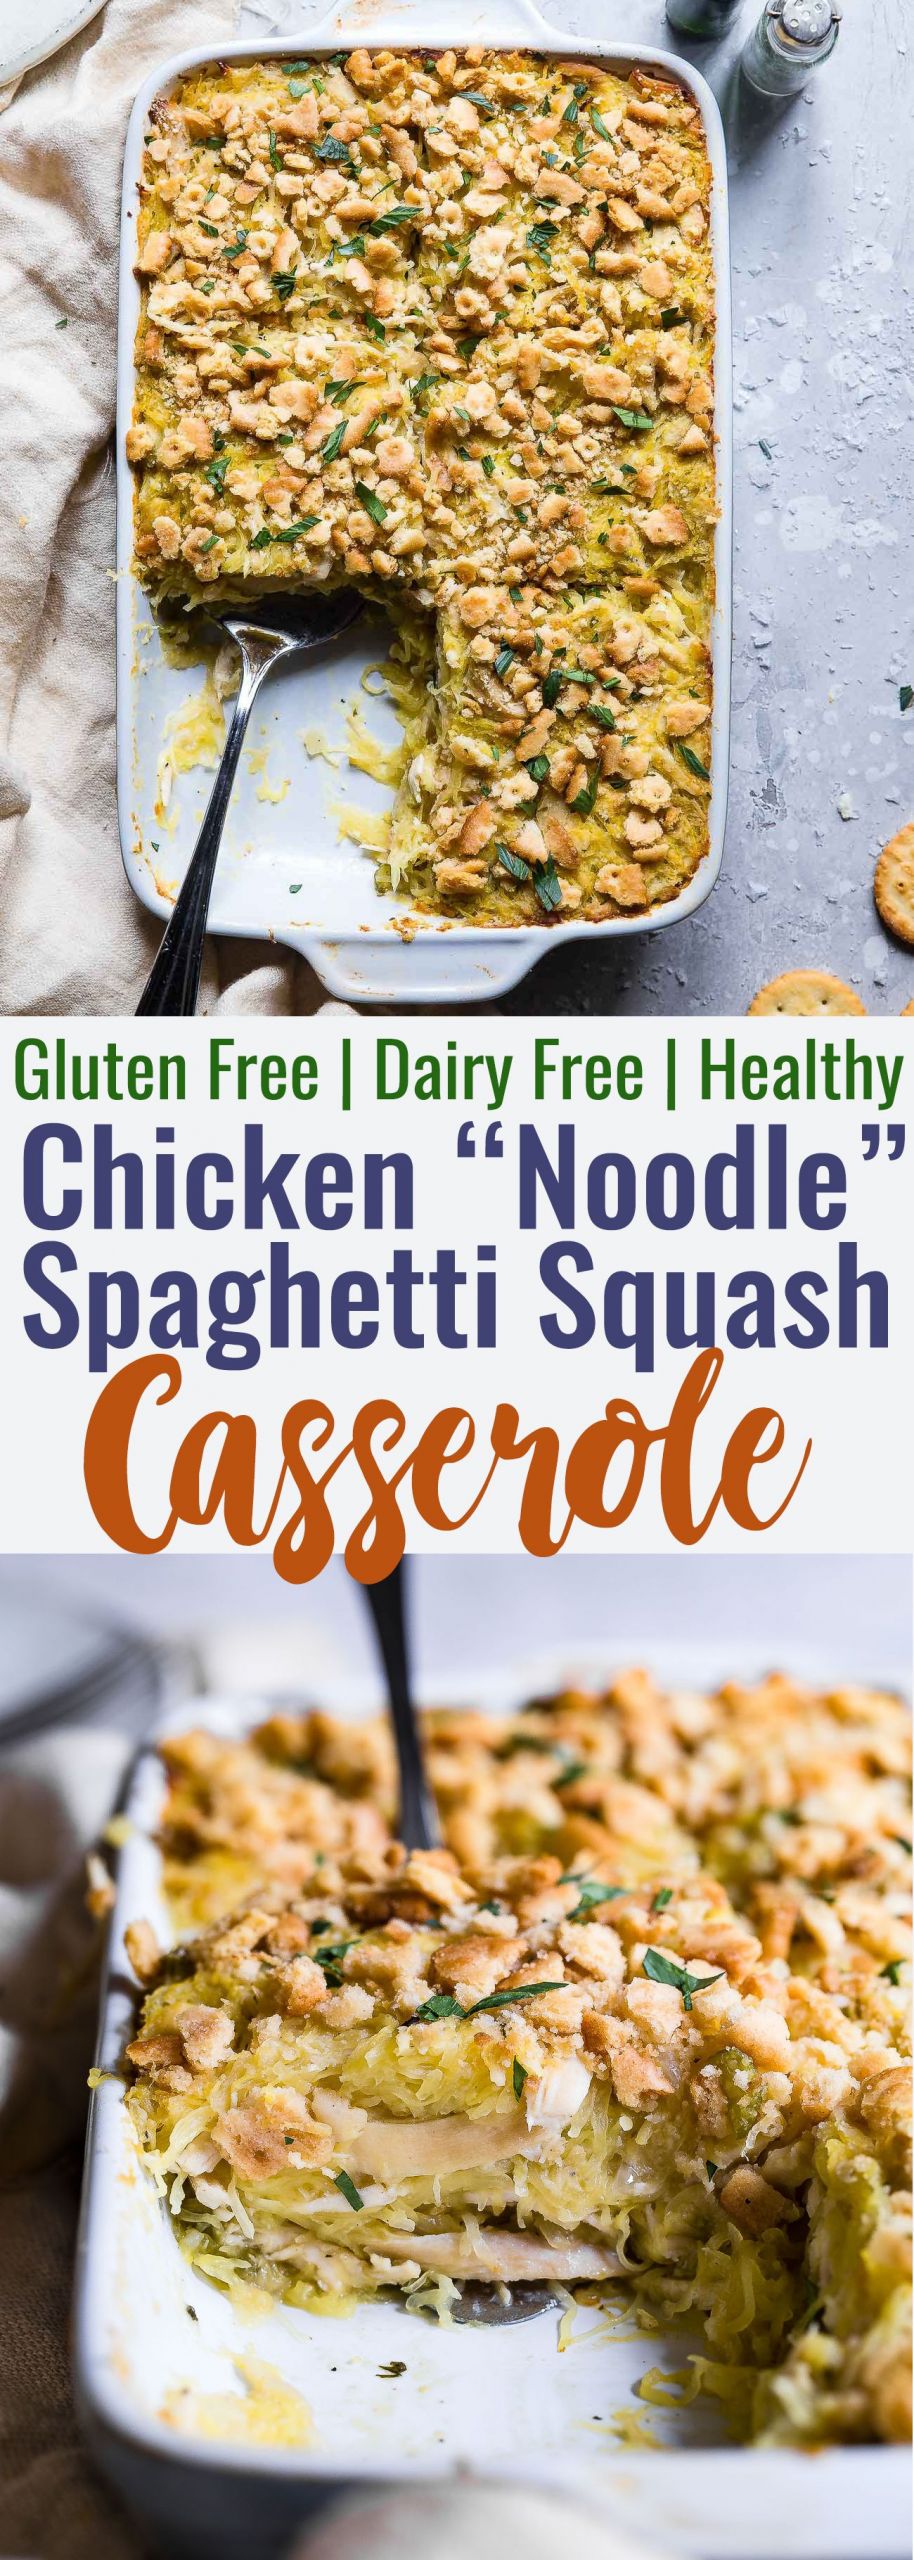 Healthy Chicken Noodle Casserole
 Healthy Chicken "Noodle" Spaghetti Squash Casserole This